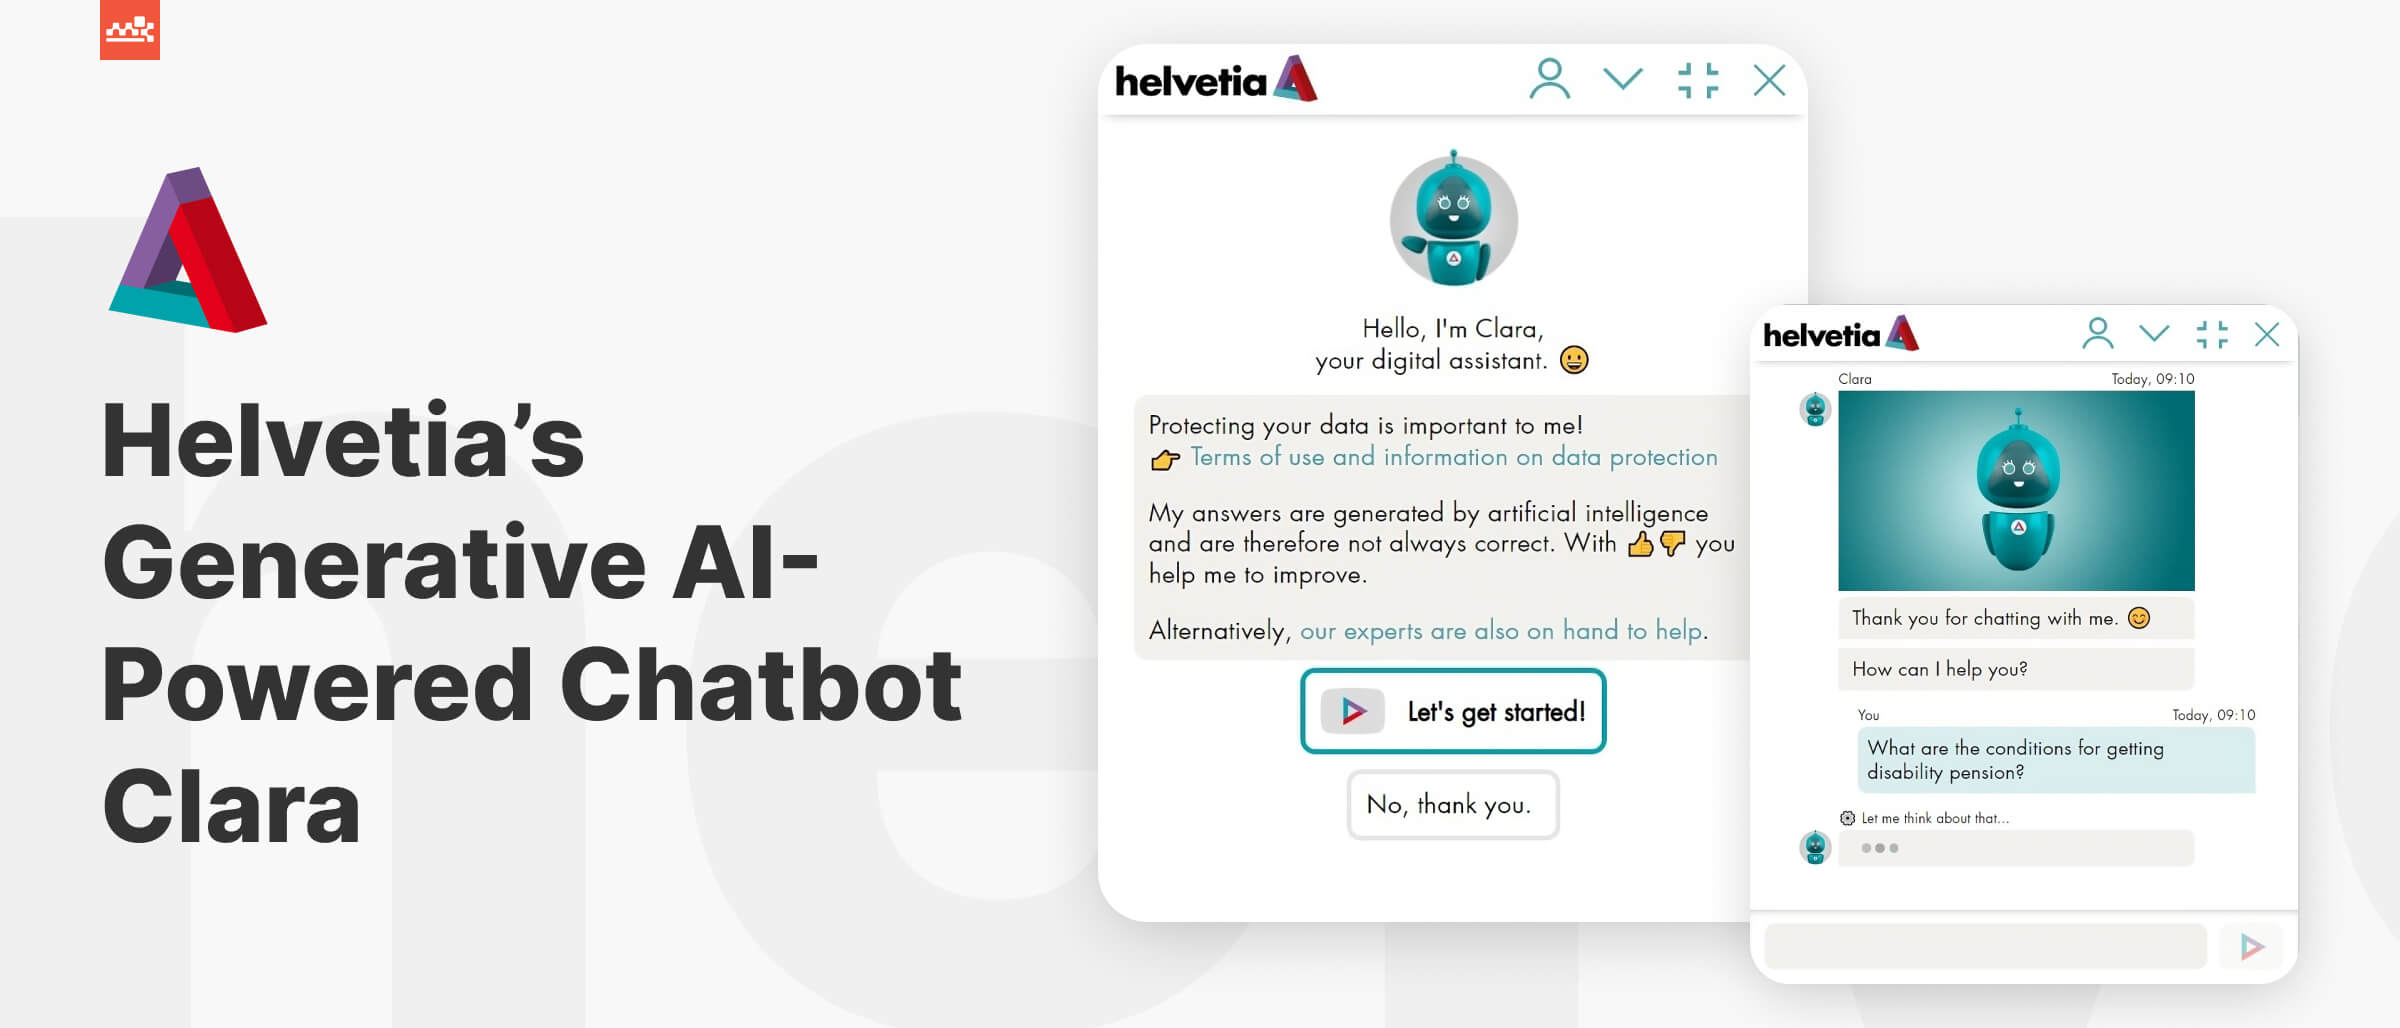 Helvetia’s Generative AI-Powered Chatbot